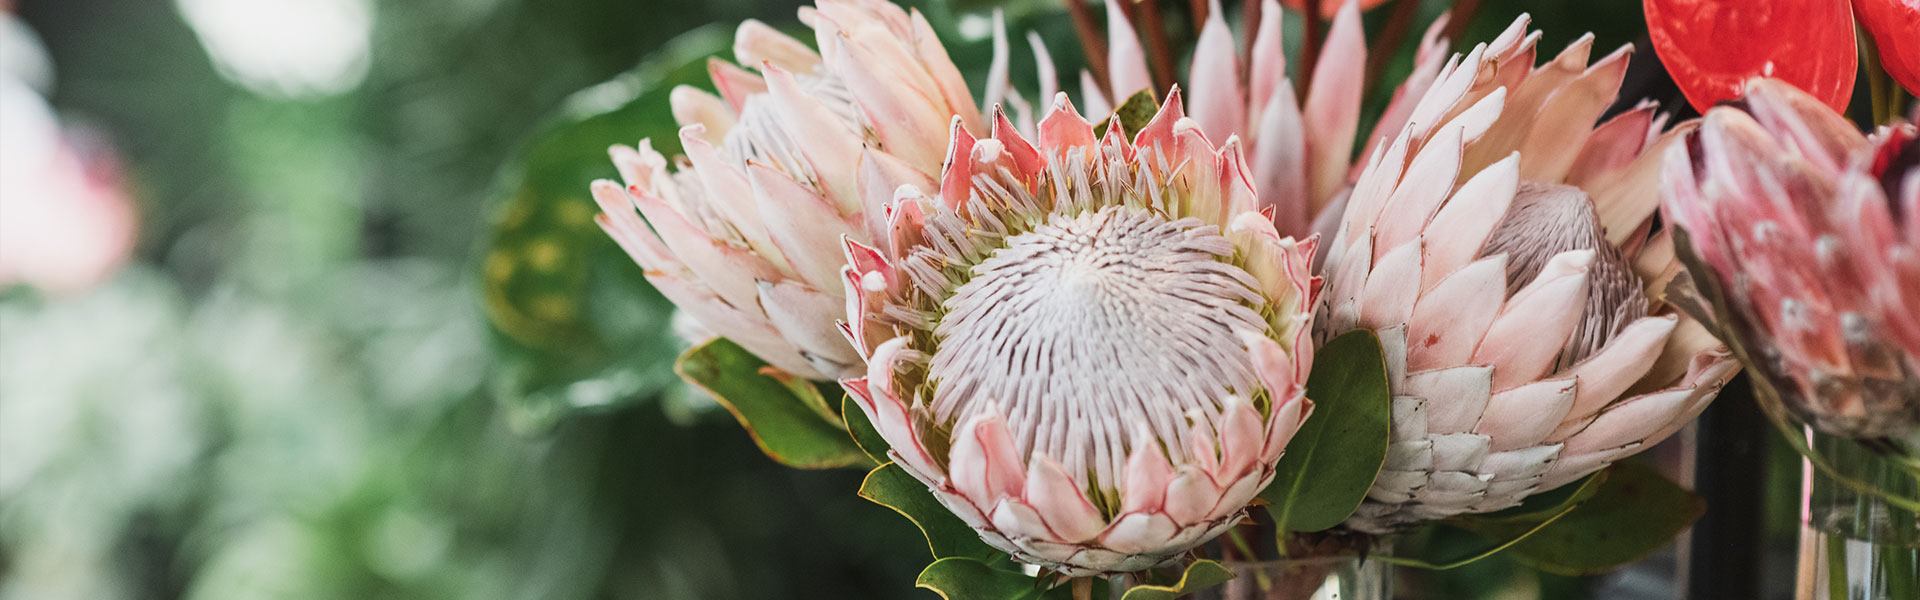 Flower Feature: Protea